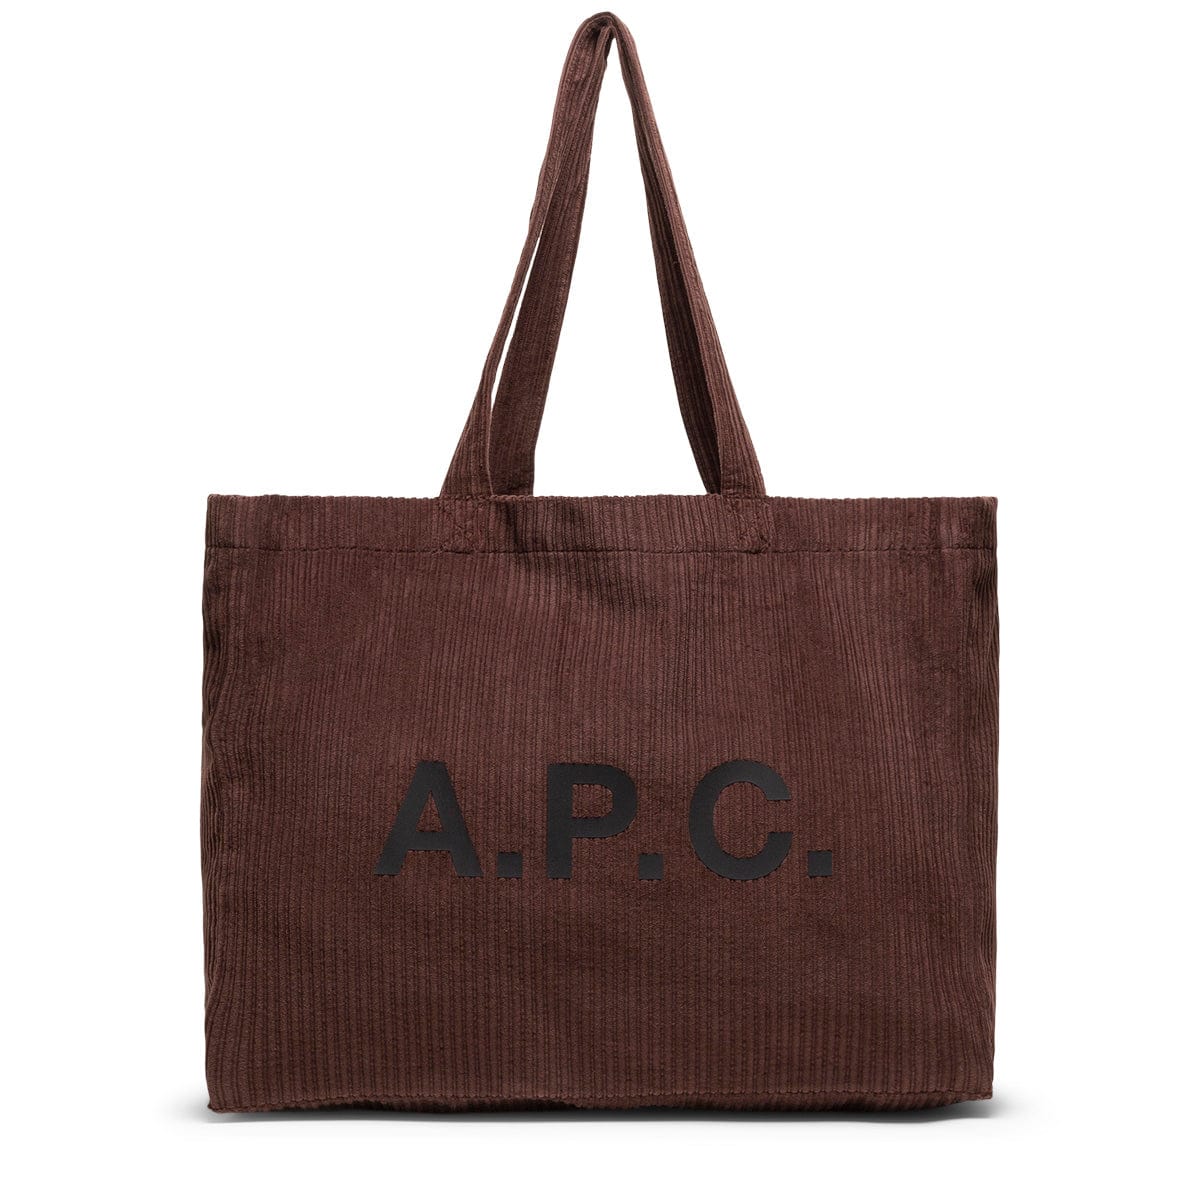 A.P.C. Diane Denim Tote Bag